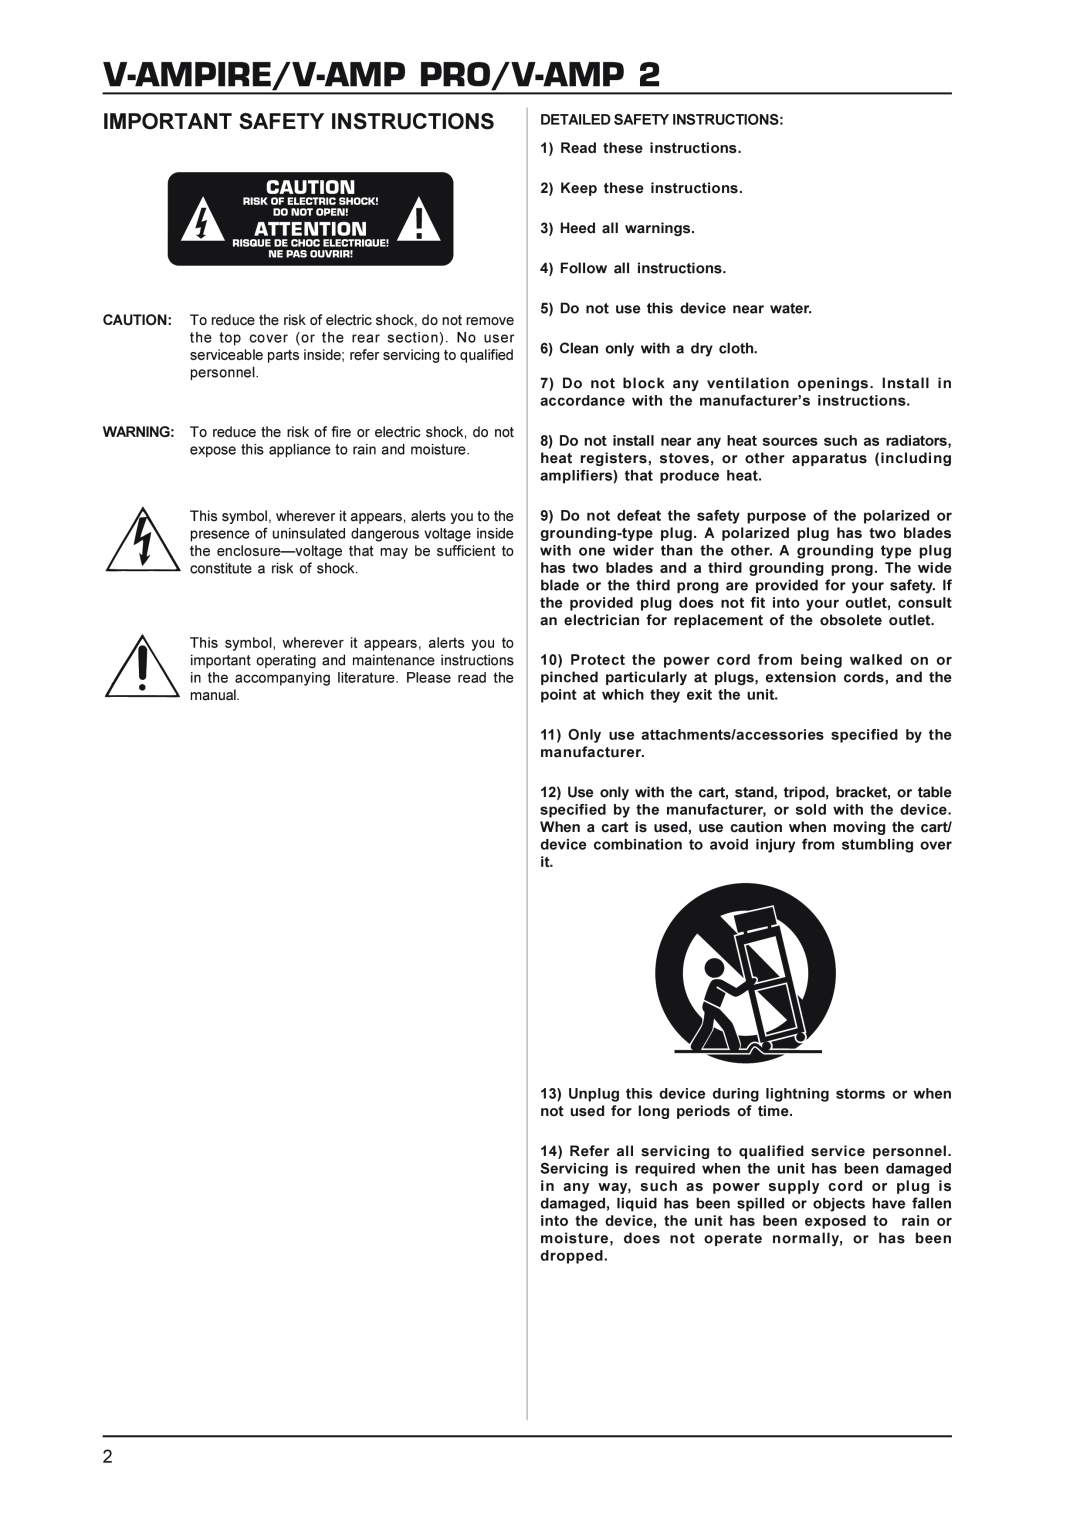 Behringer V-AMP 2, V-AMPIRE, V-AMP PRO manual V-Ampire/V-Amp Pro/V-Amp, Important Safety Instructions 